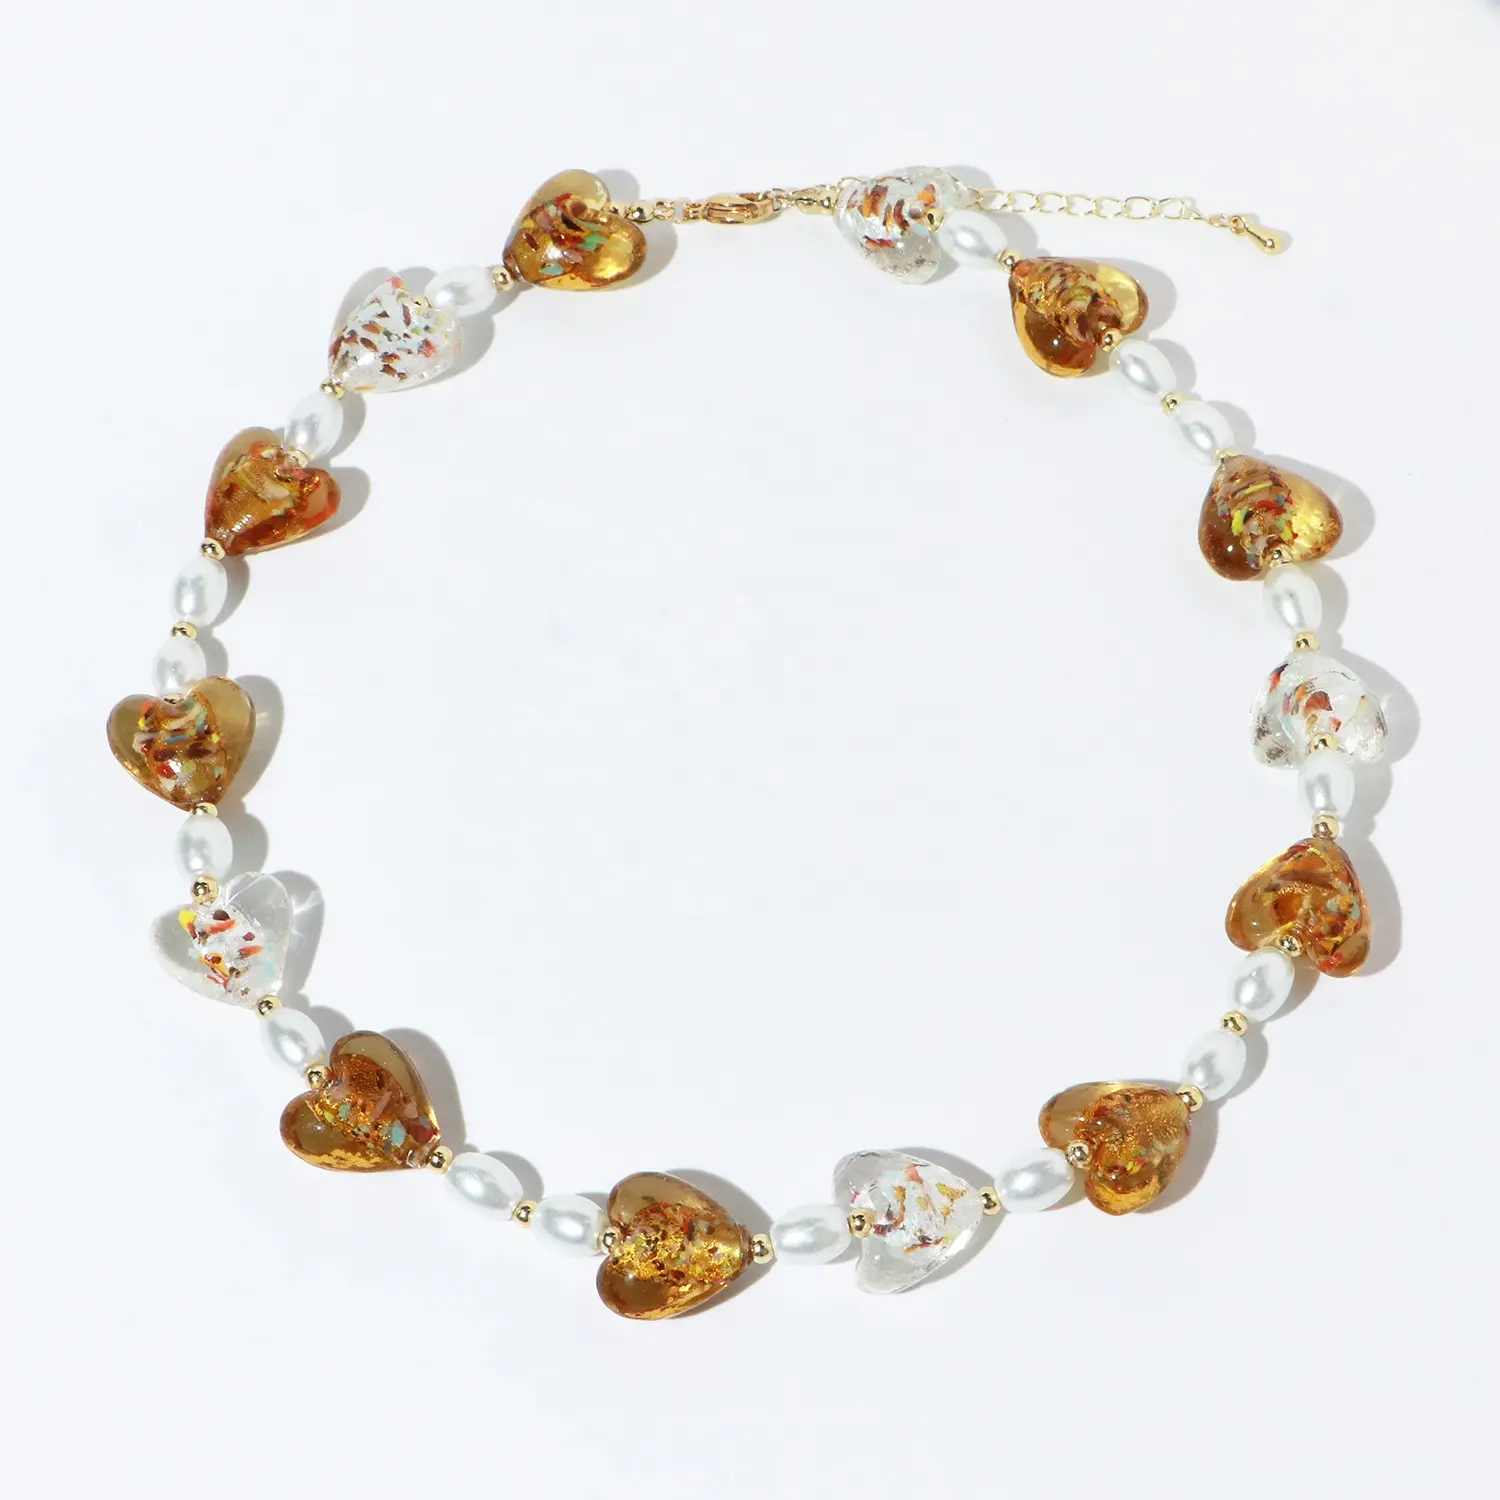 Original Design Handmade Custom Amber Heart Beaded Choker Necklace Jewelry for Women